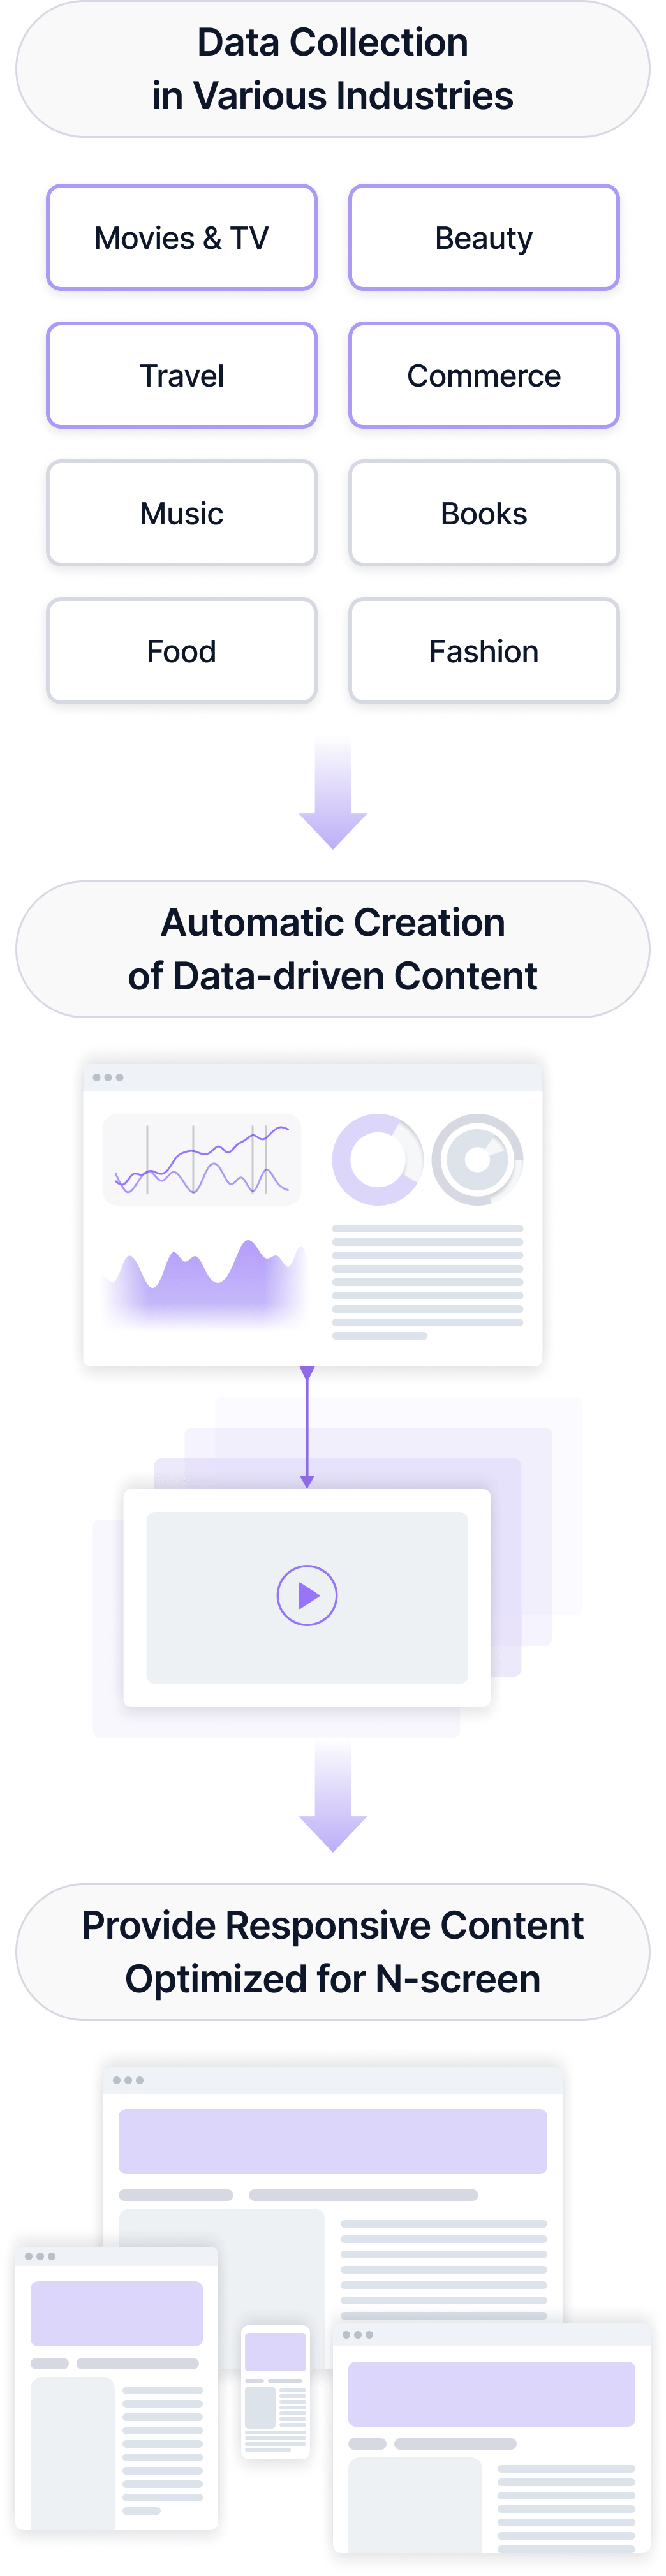 Data Visualization image